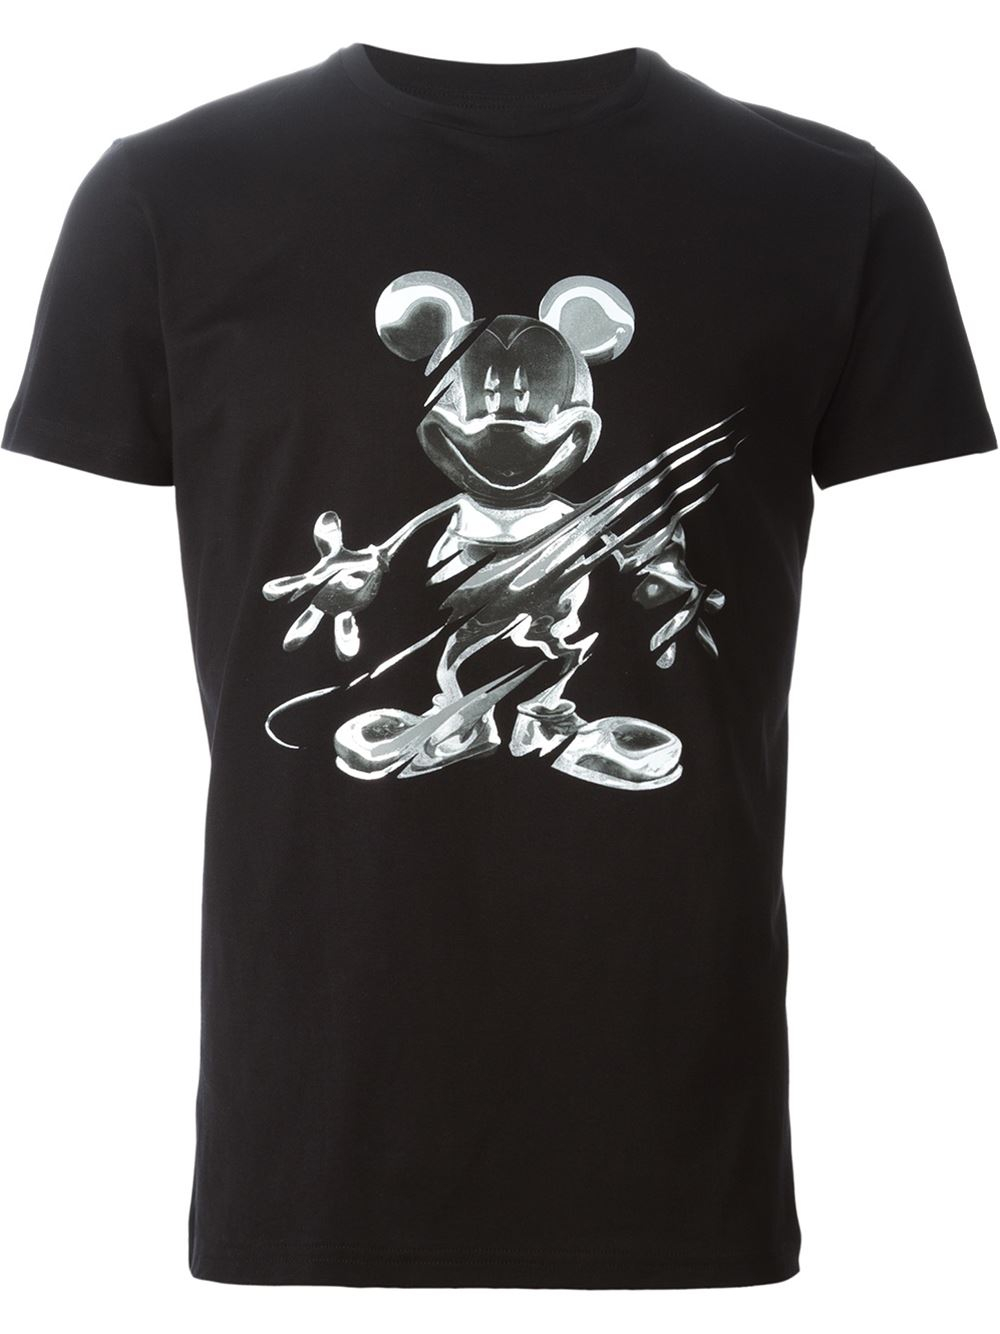 Lyst - Iceberg Mickey Mouse Print T-Shirt in Black for Men